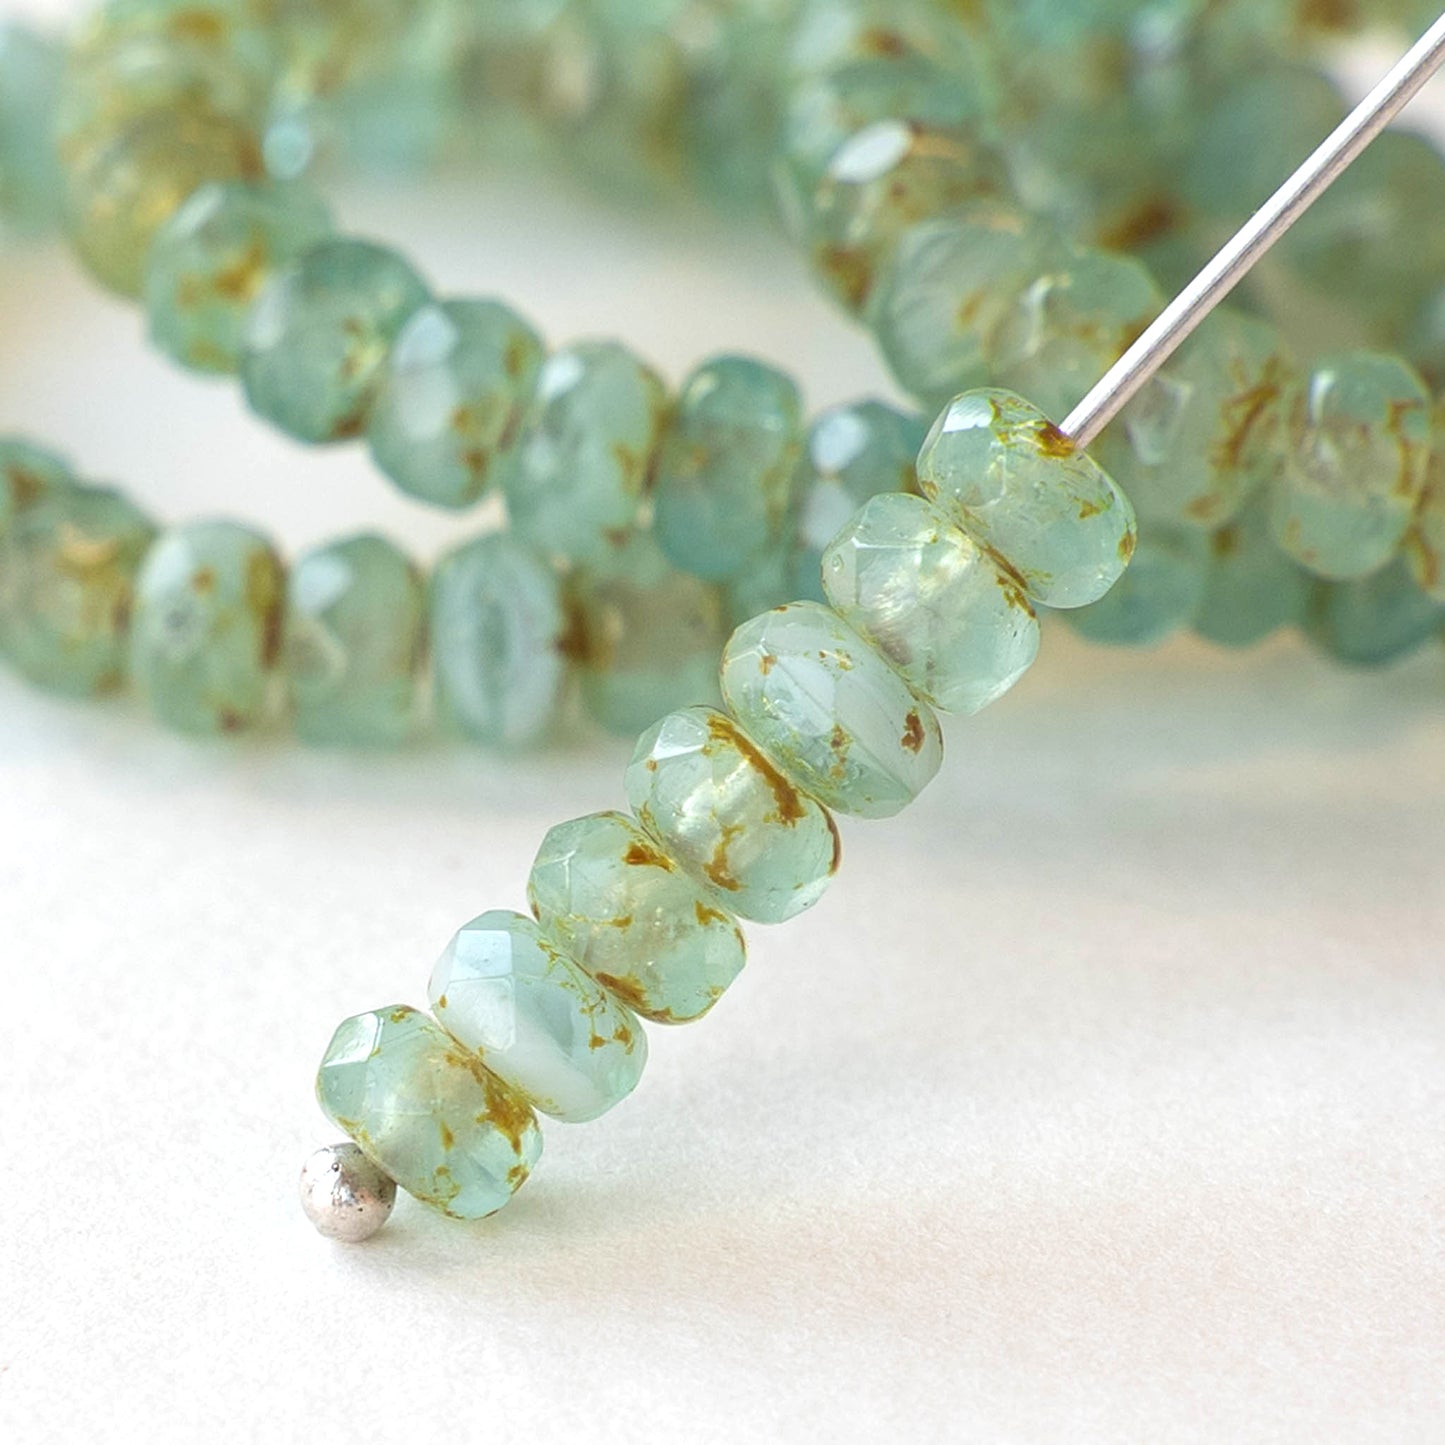 3x5mm Rondelle Beads - Lt. Green Opaline - 30 Beads